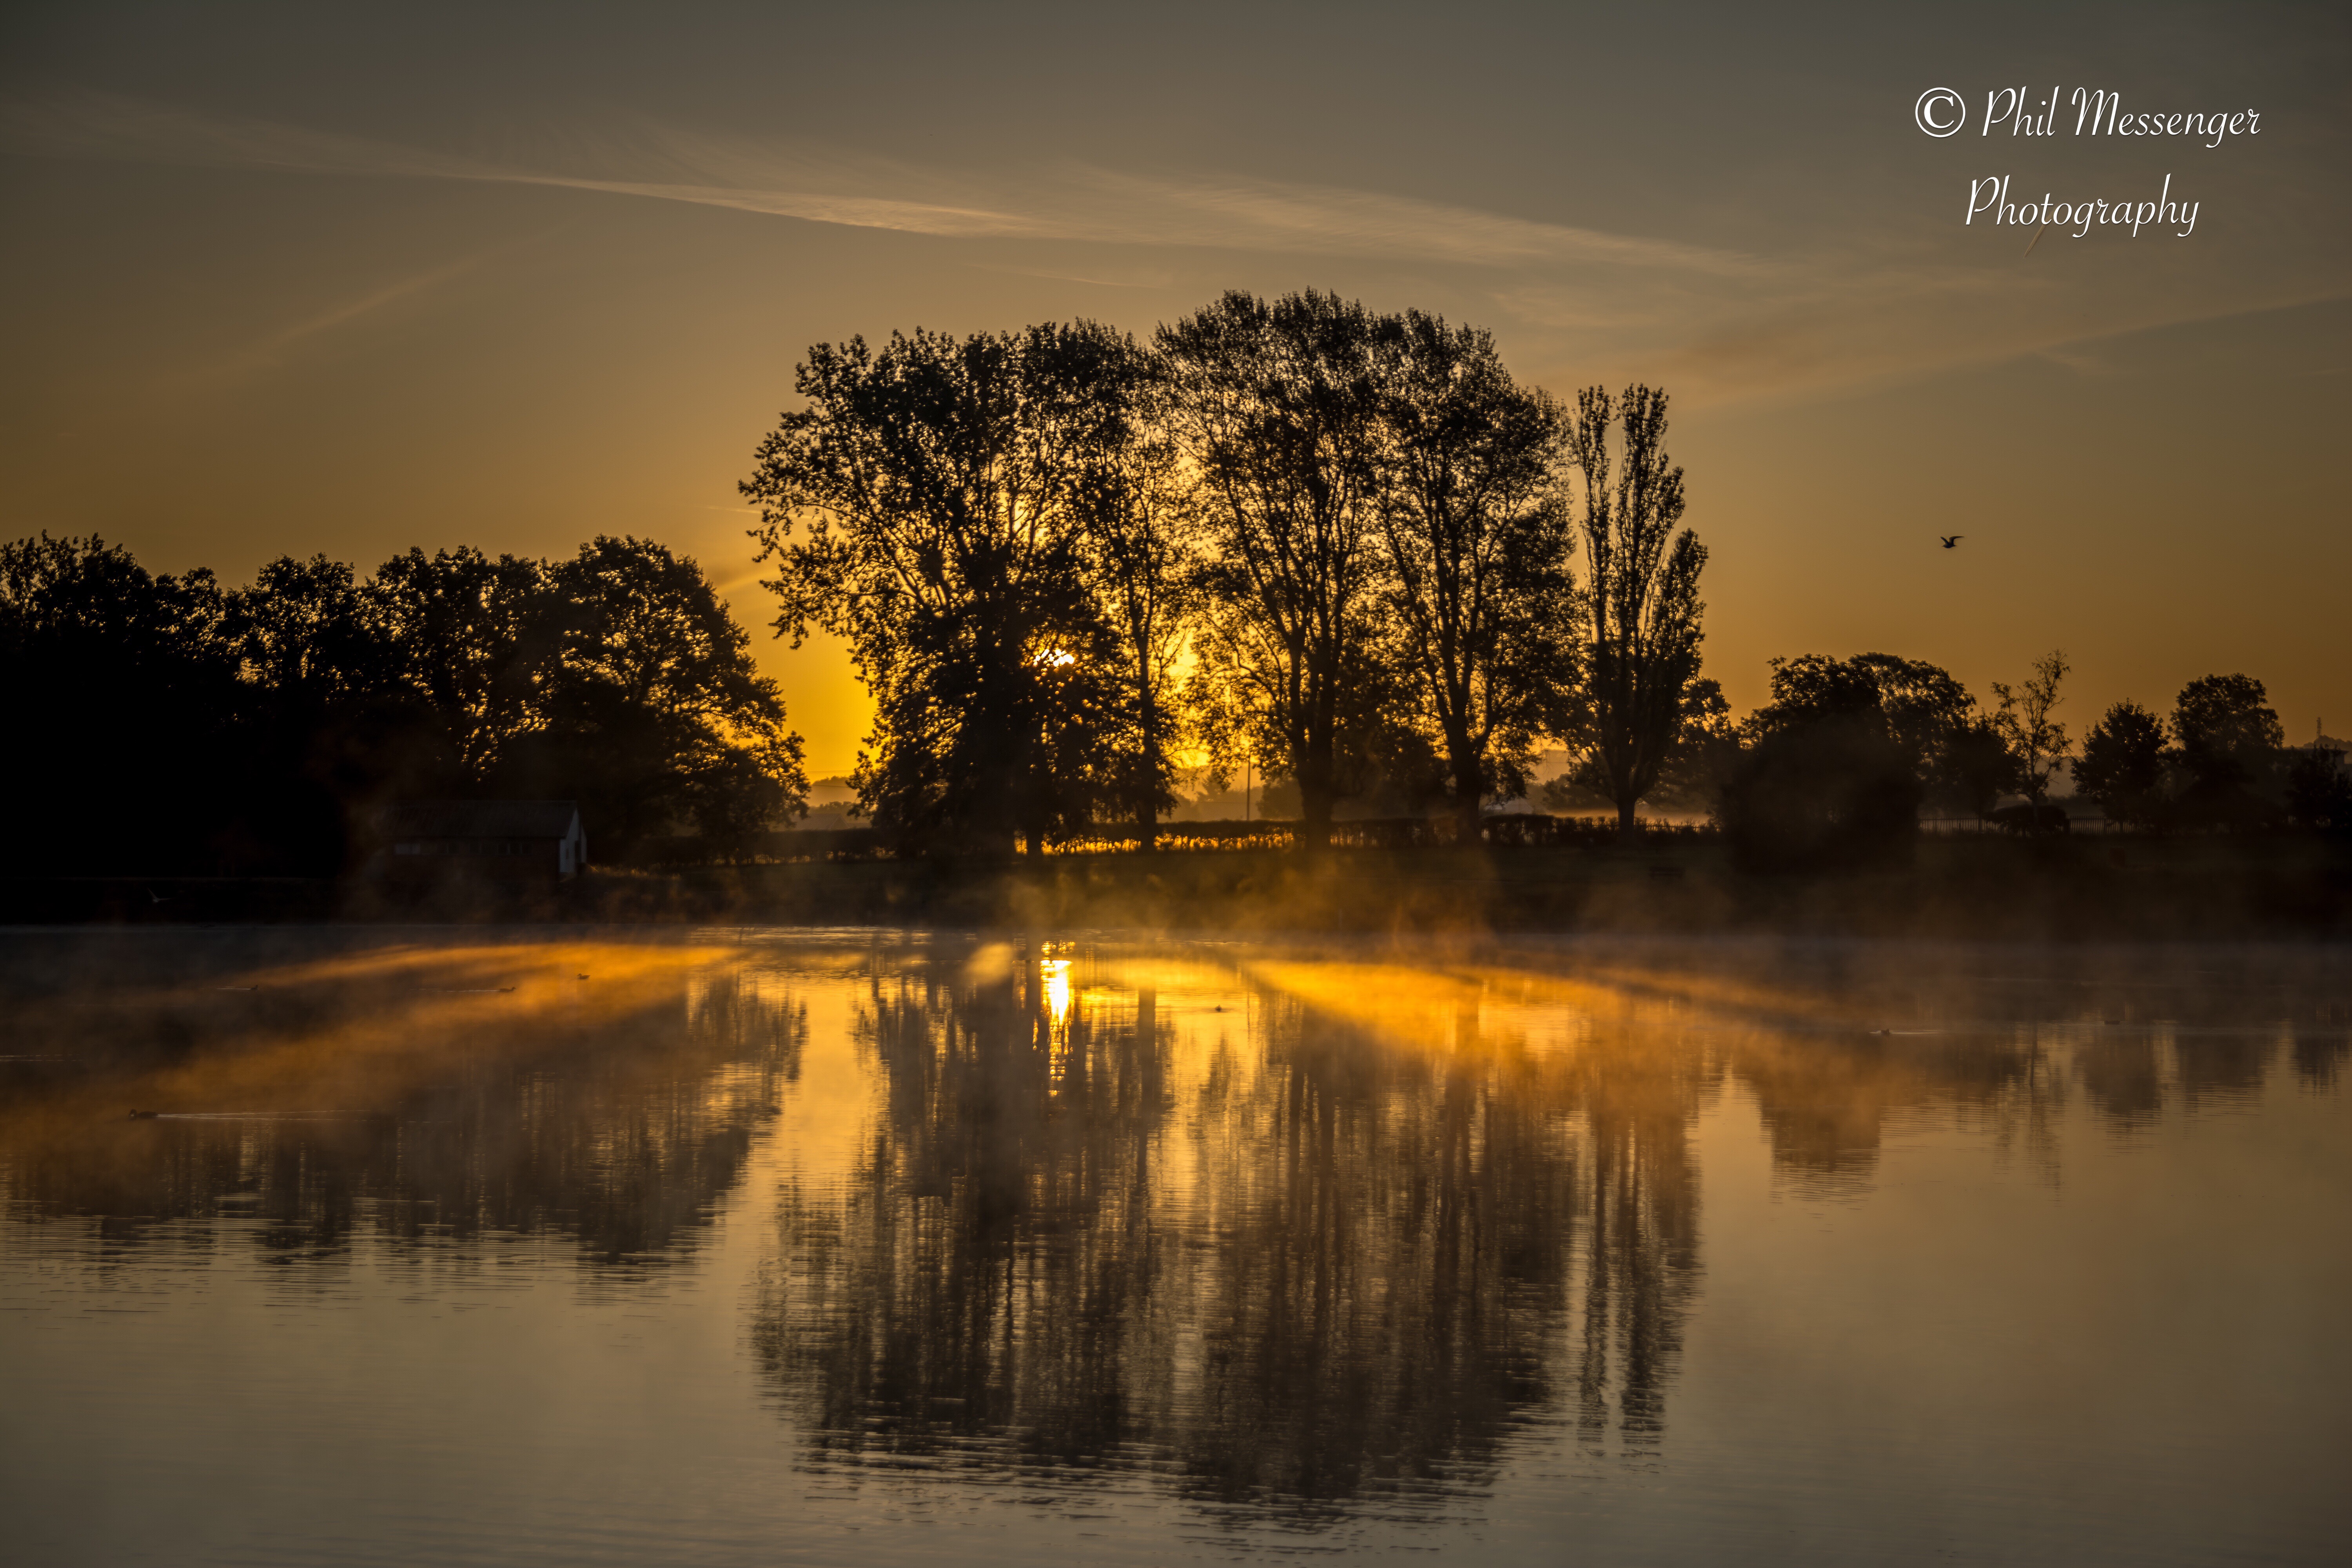 A beautiful sunrise at Coate Water, Swindon, Wiltshire.